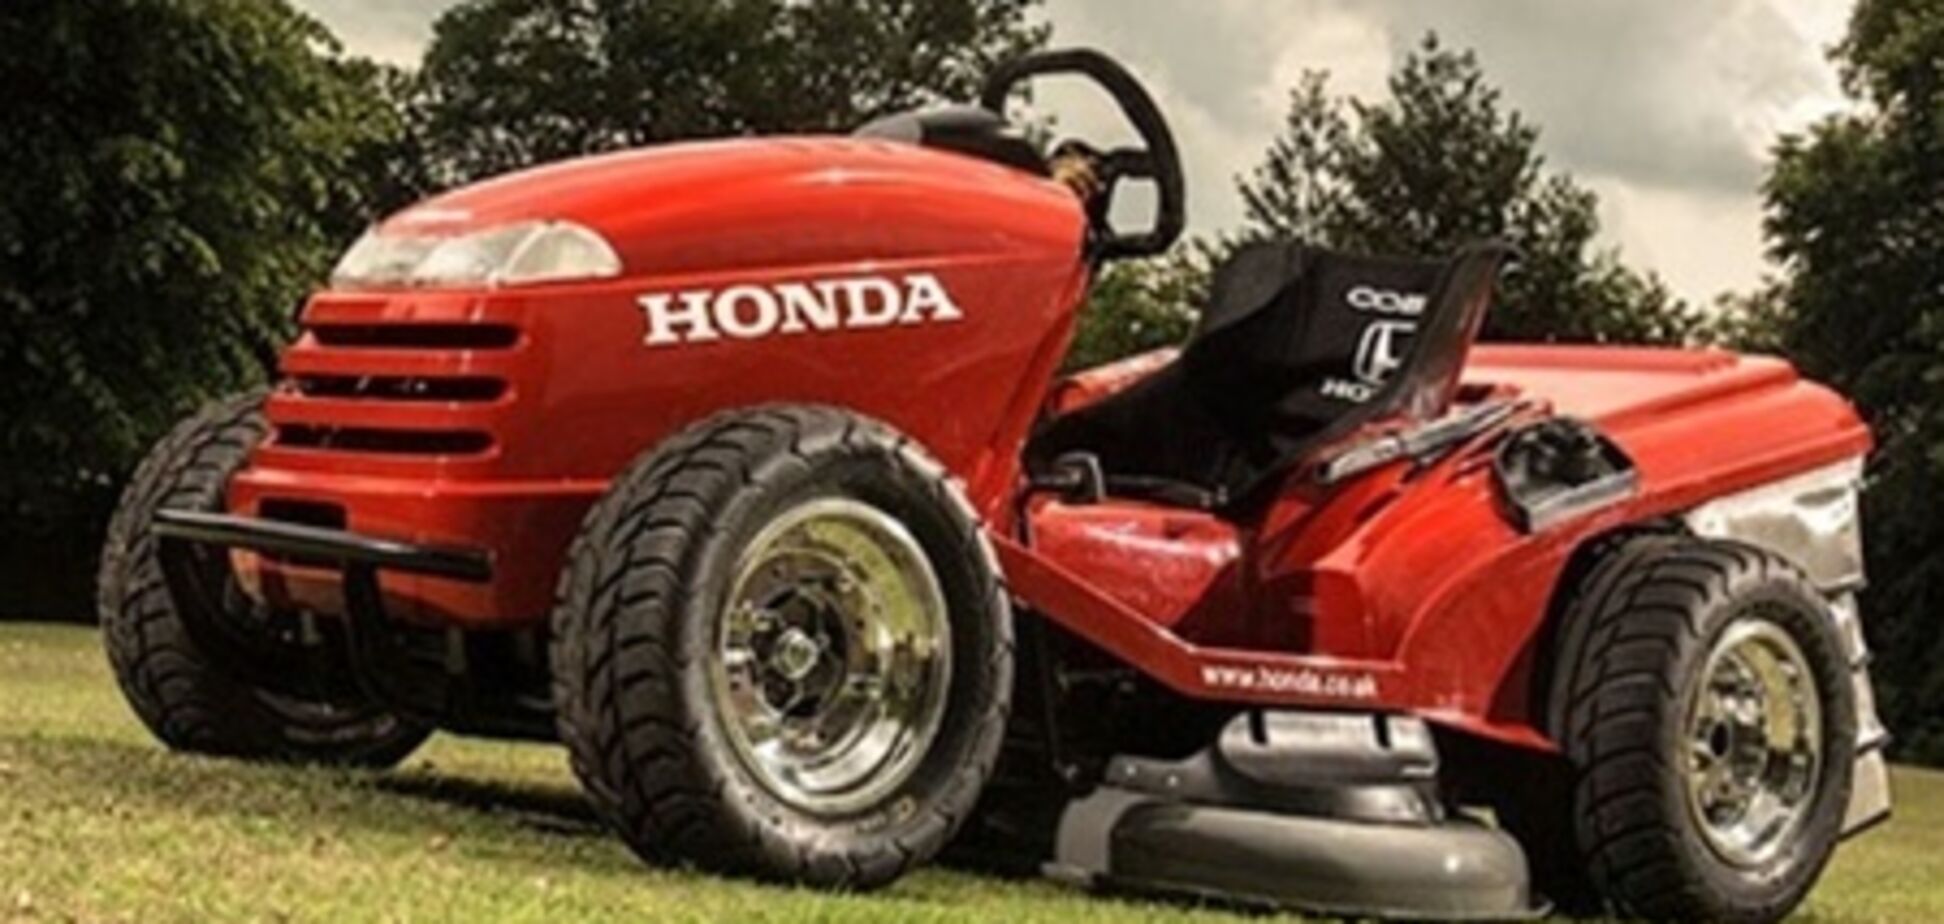 Honda научила газонокосилку разгоняться до 'сотни' за 4 секунды